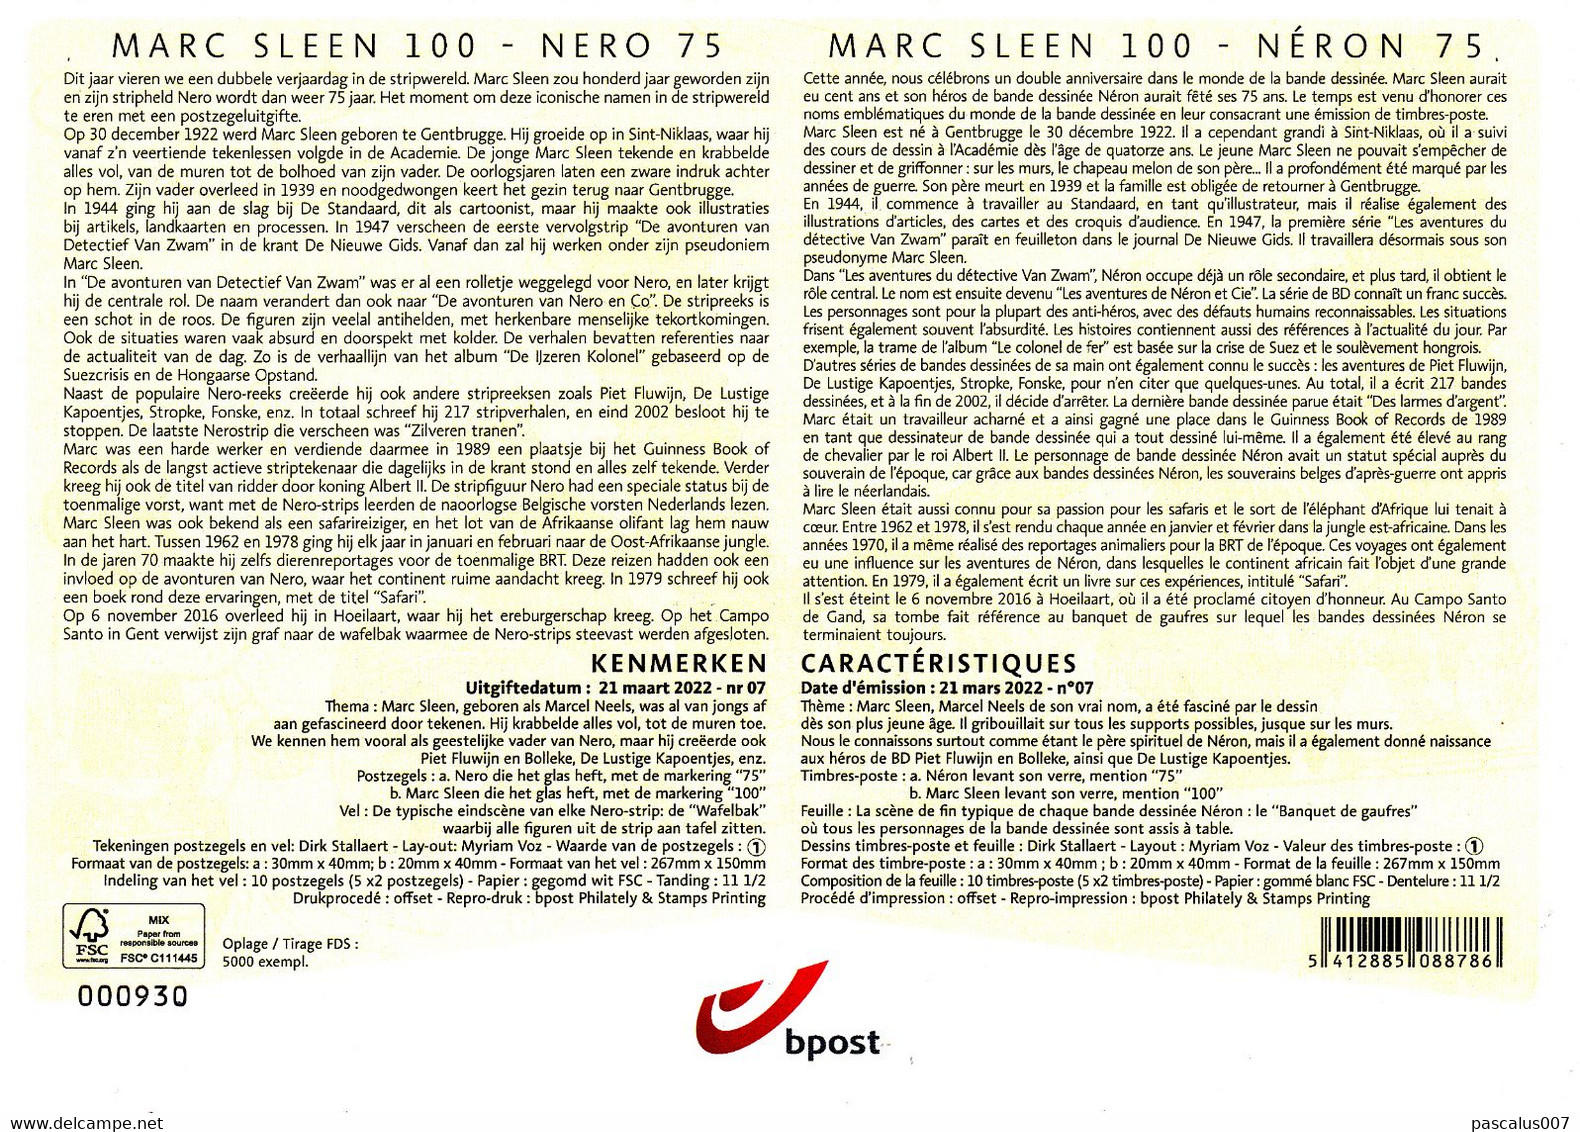 13   BL   2022-07 Belgique A5 FDS First Day Sheet  BD Nero Néron Marc Sleen Bruxelles 1000 Brussel 21-3-2022 088786 - 2011-2014